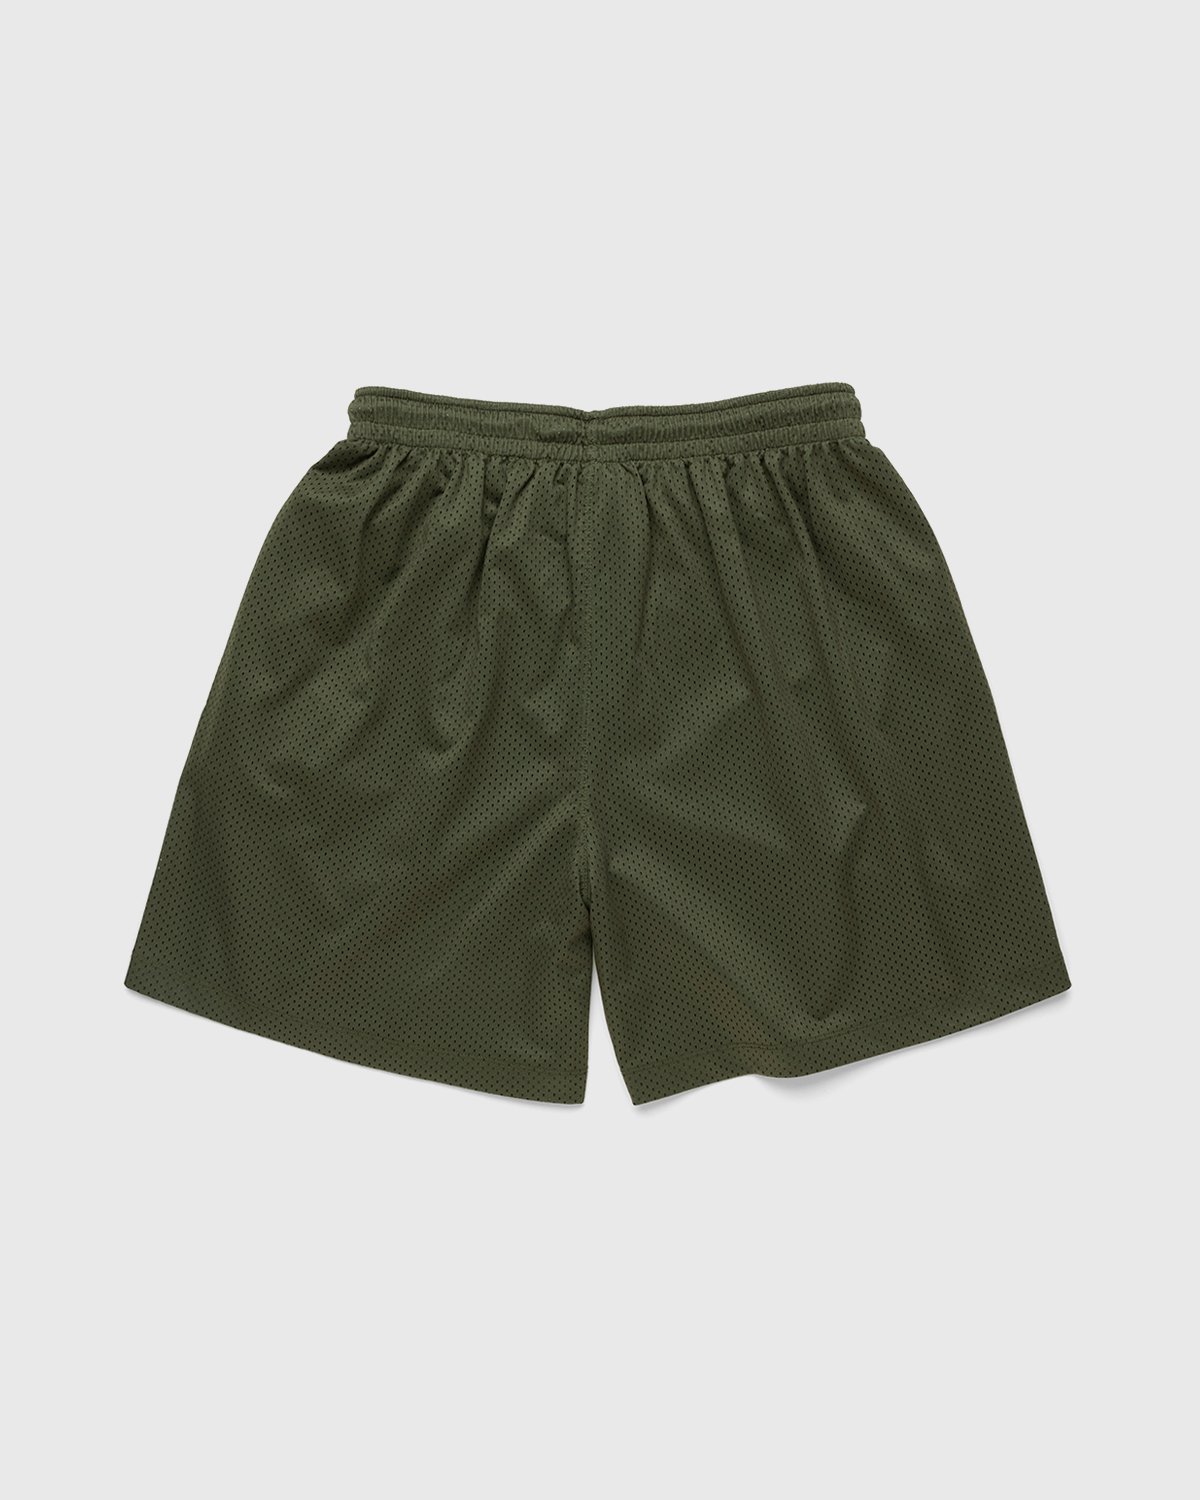 Highsnobiety - HS Sports Reversible Mesh Shorts Black/Khaki - Clothing - Green - Image 2